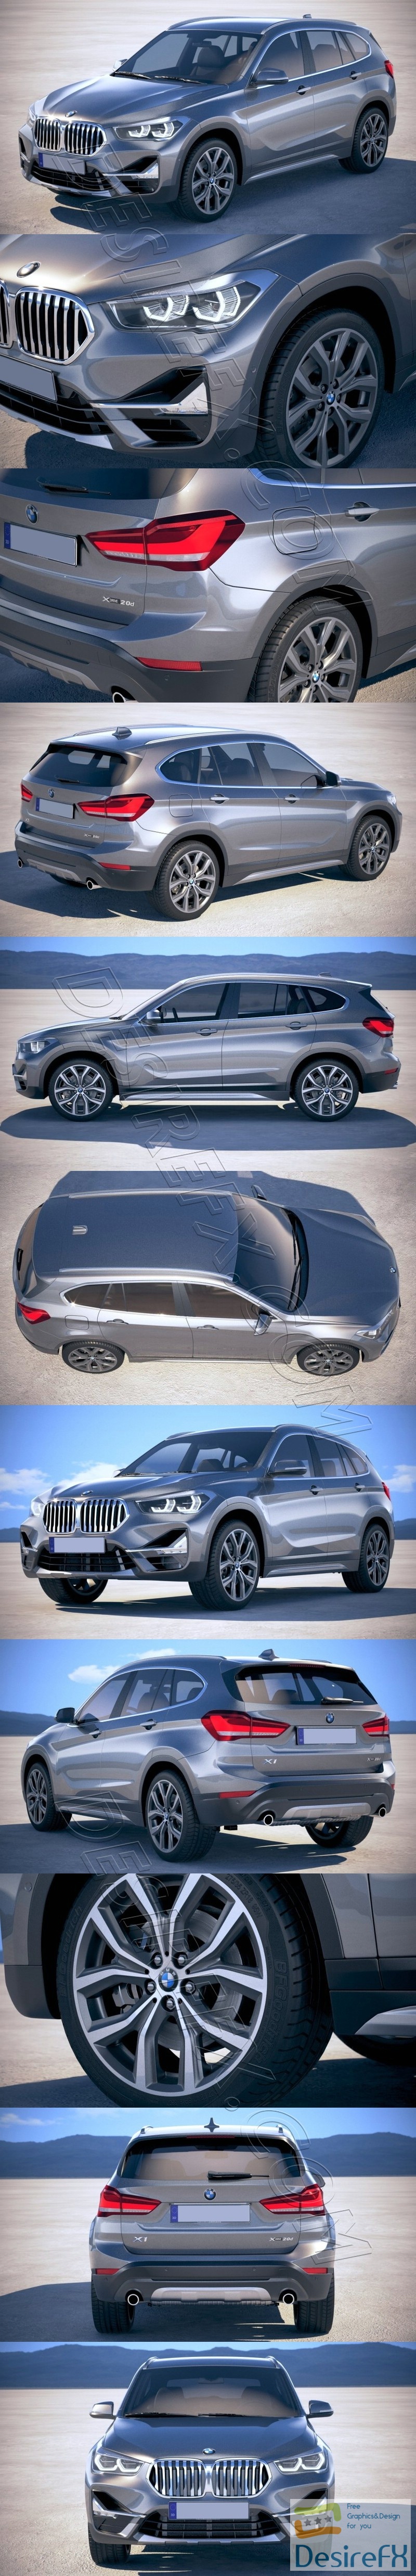 BMW X1 2020 3D Model